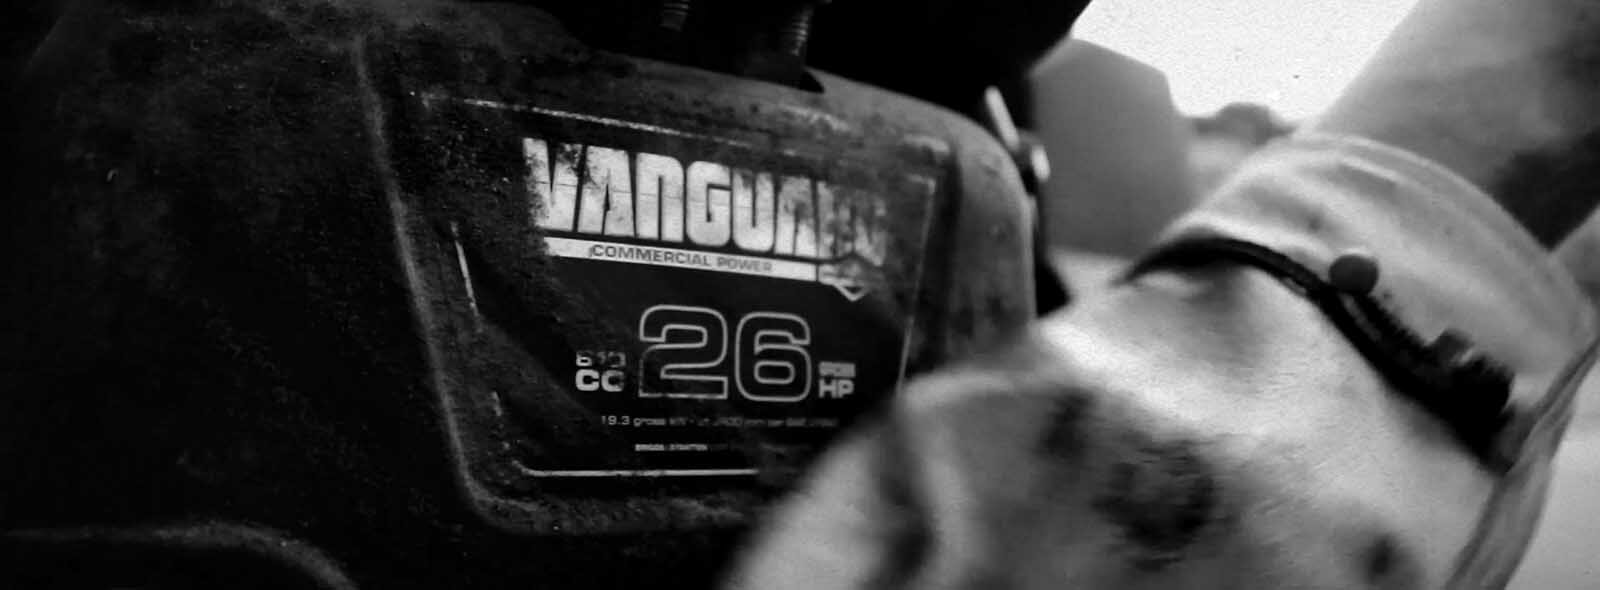 Vanguard Vertical Shaft Engines